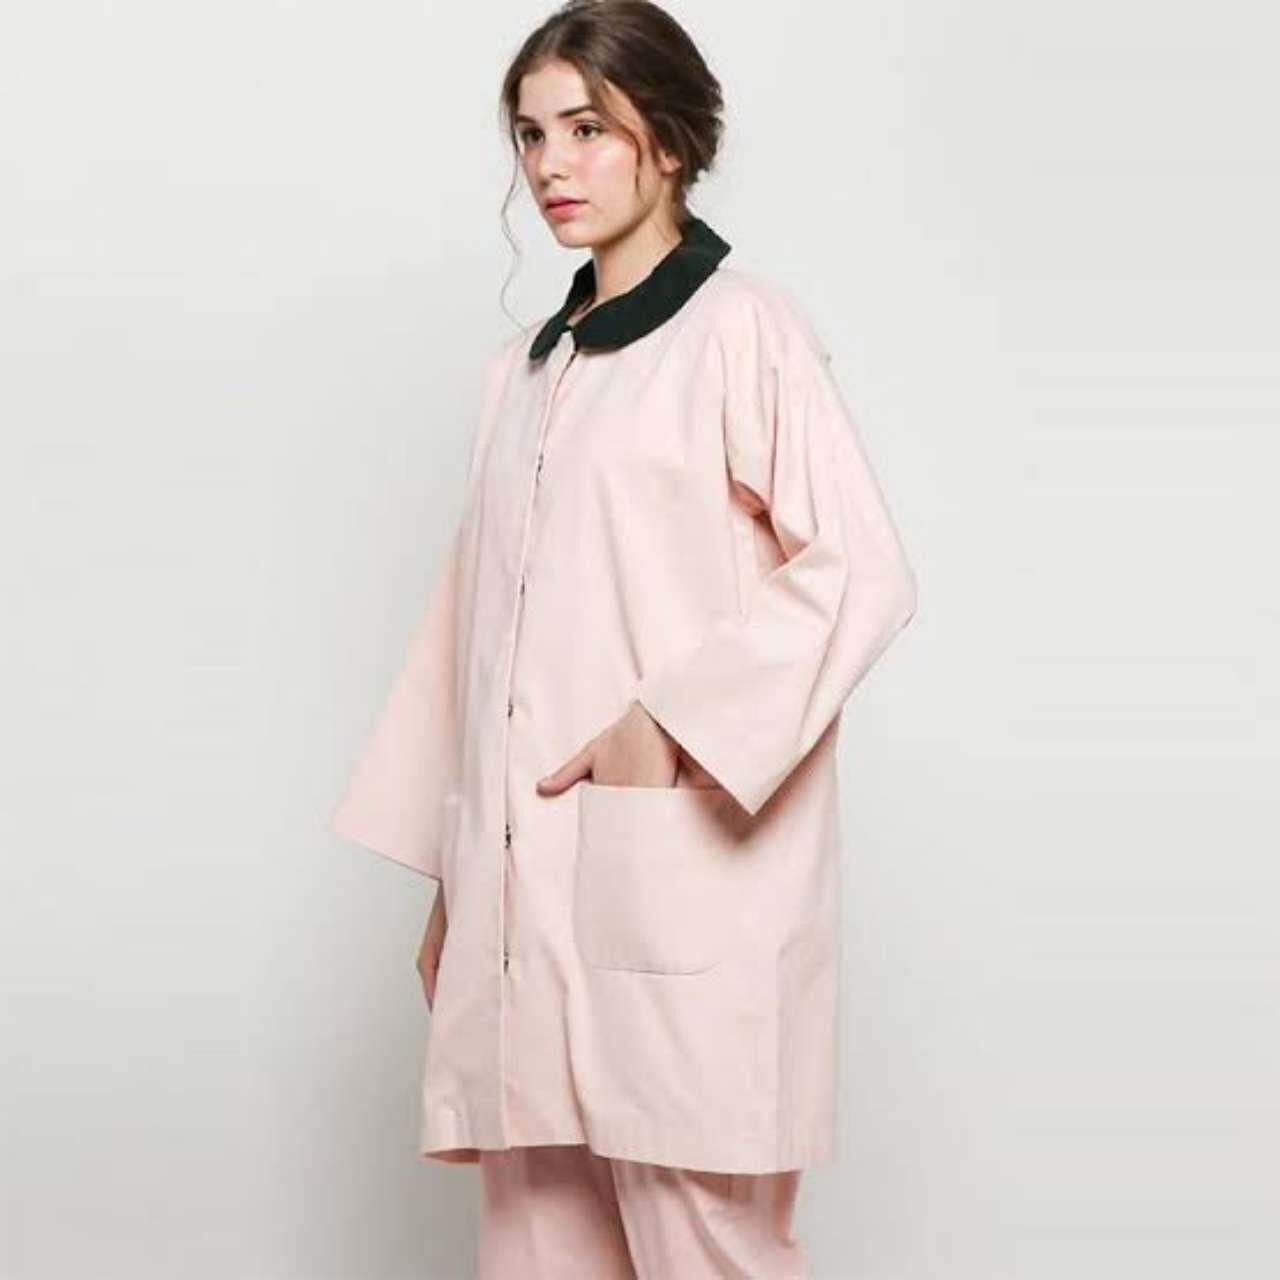 Argyle Oxford Pink Coat